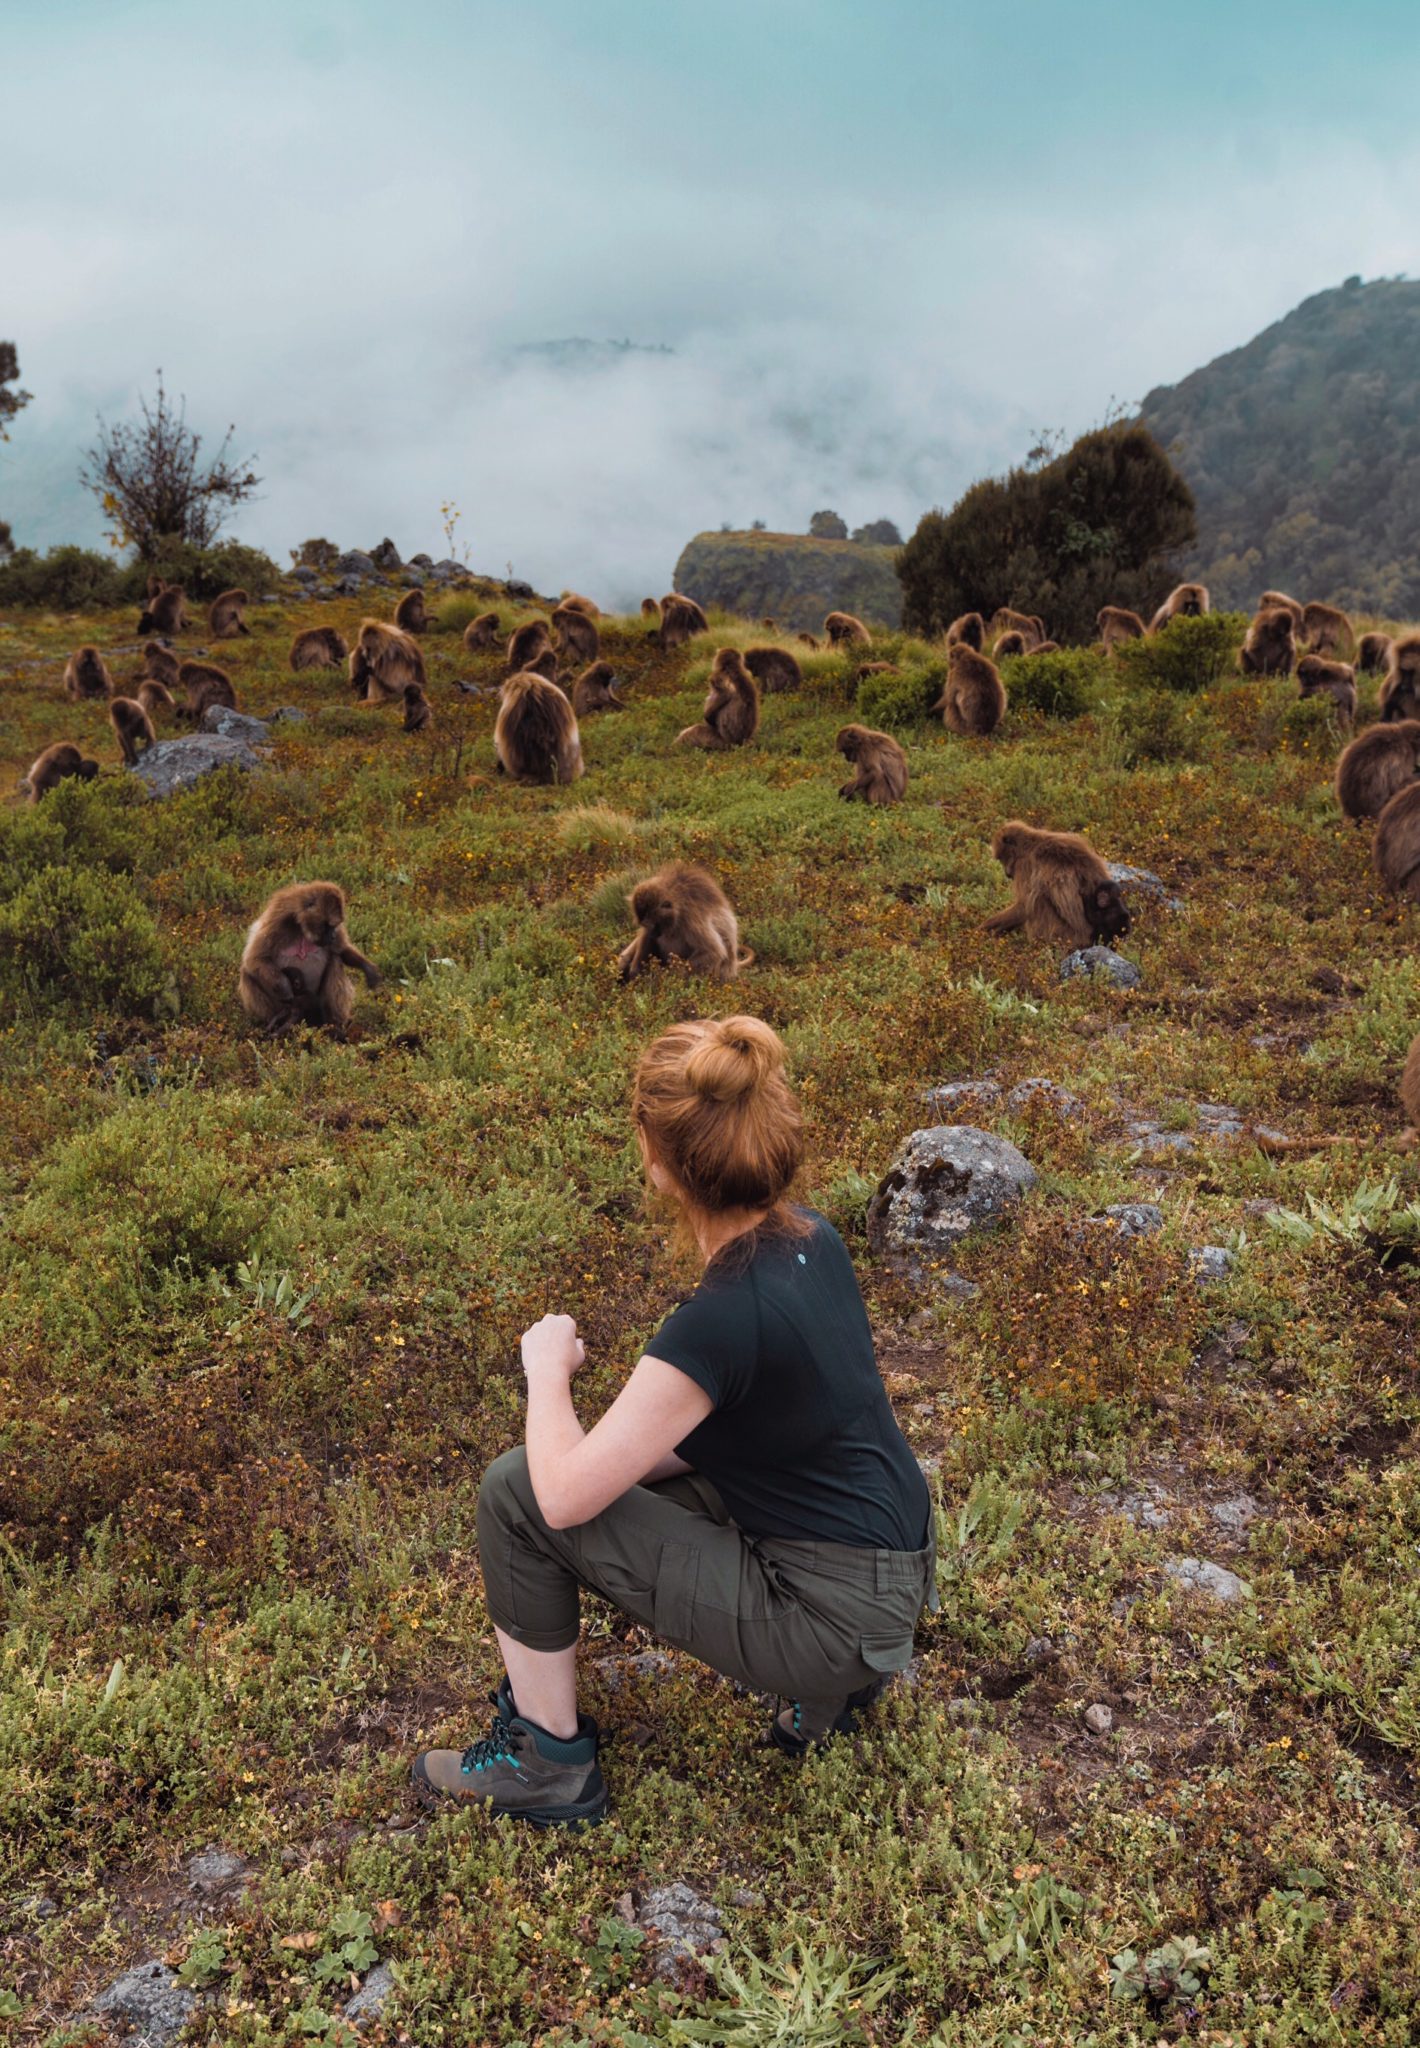 How to Visit the Gelada Monkeys in Ethiopia